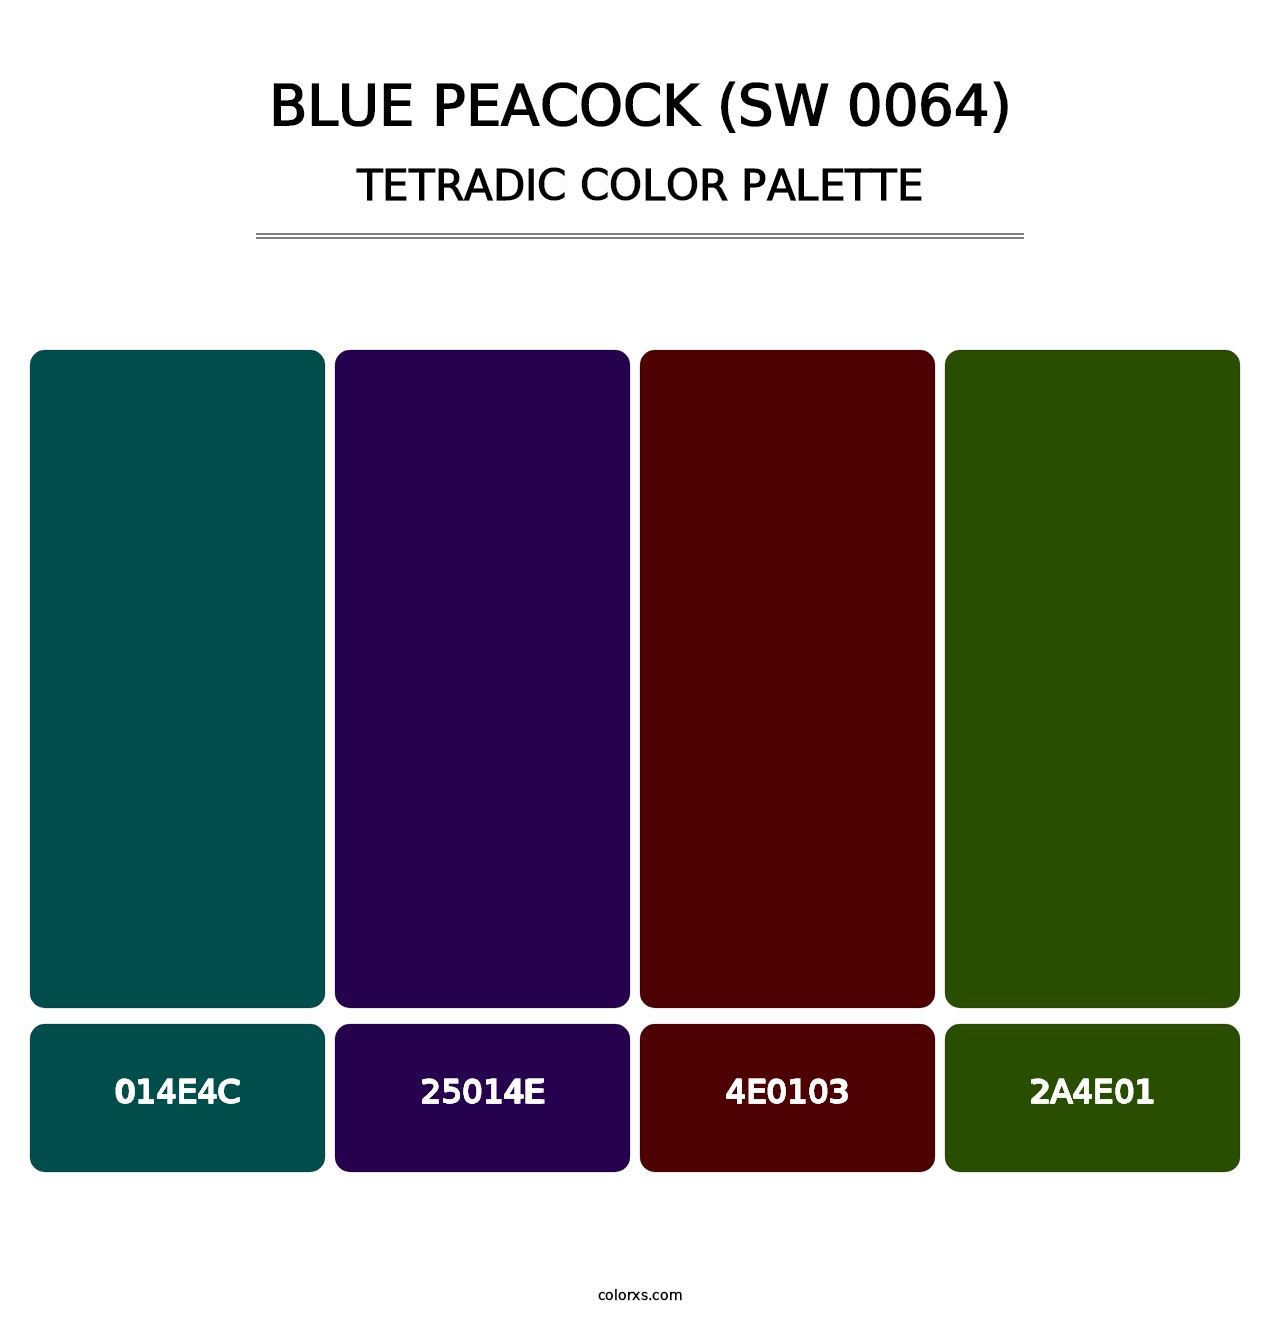 Blue Peacock (SW 0064) - Tetradic Color Palette